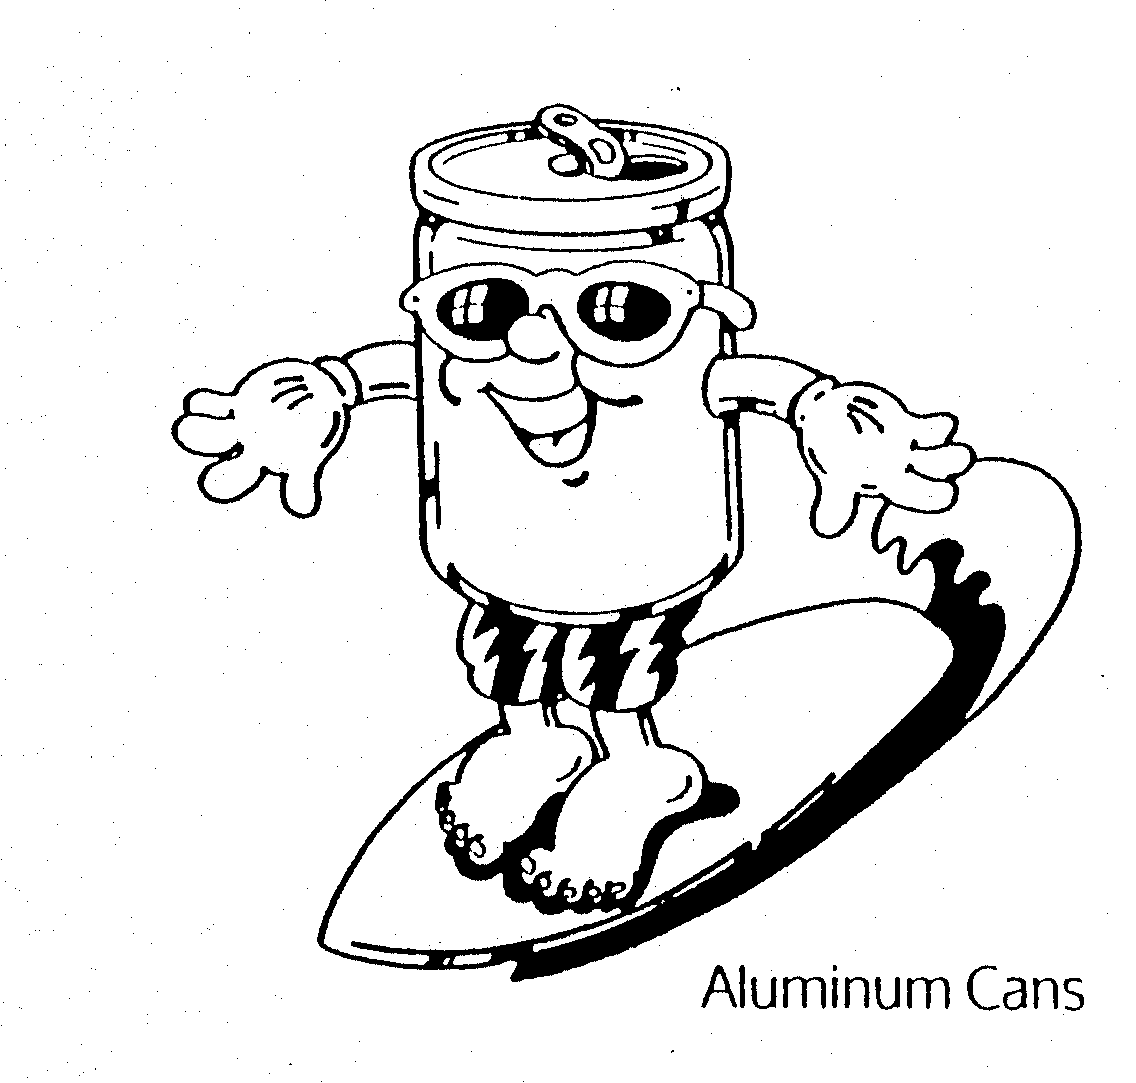  ALUMINUM CANS